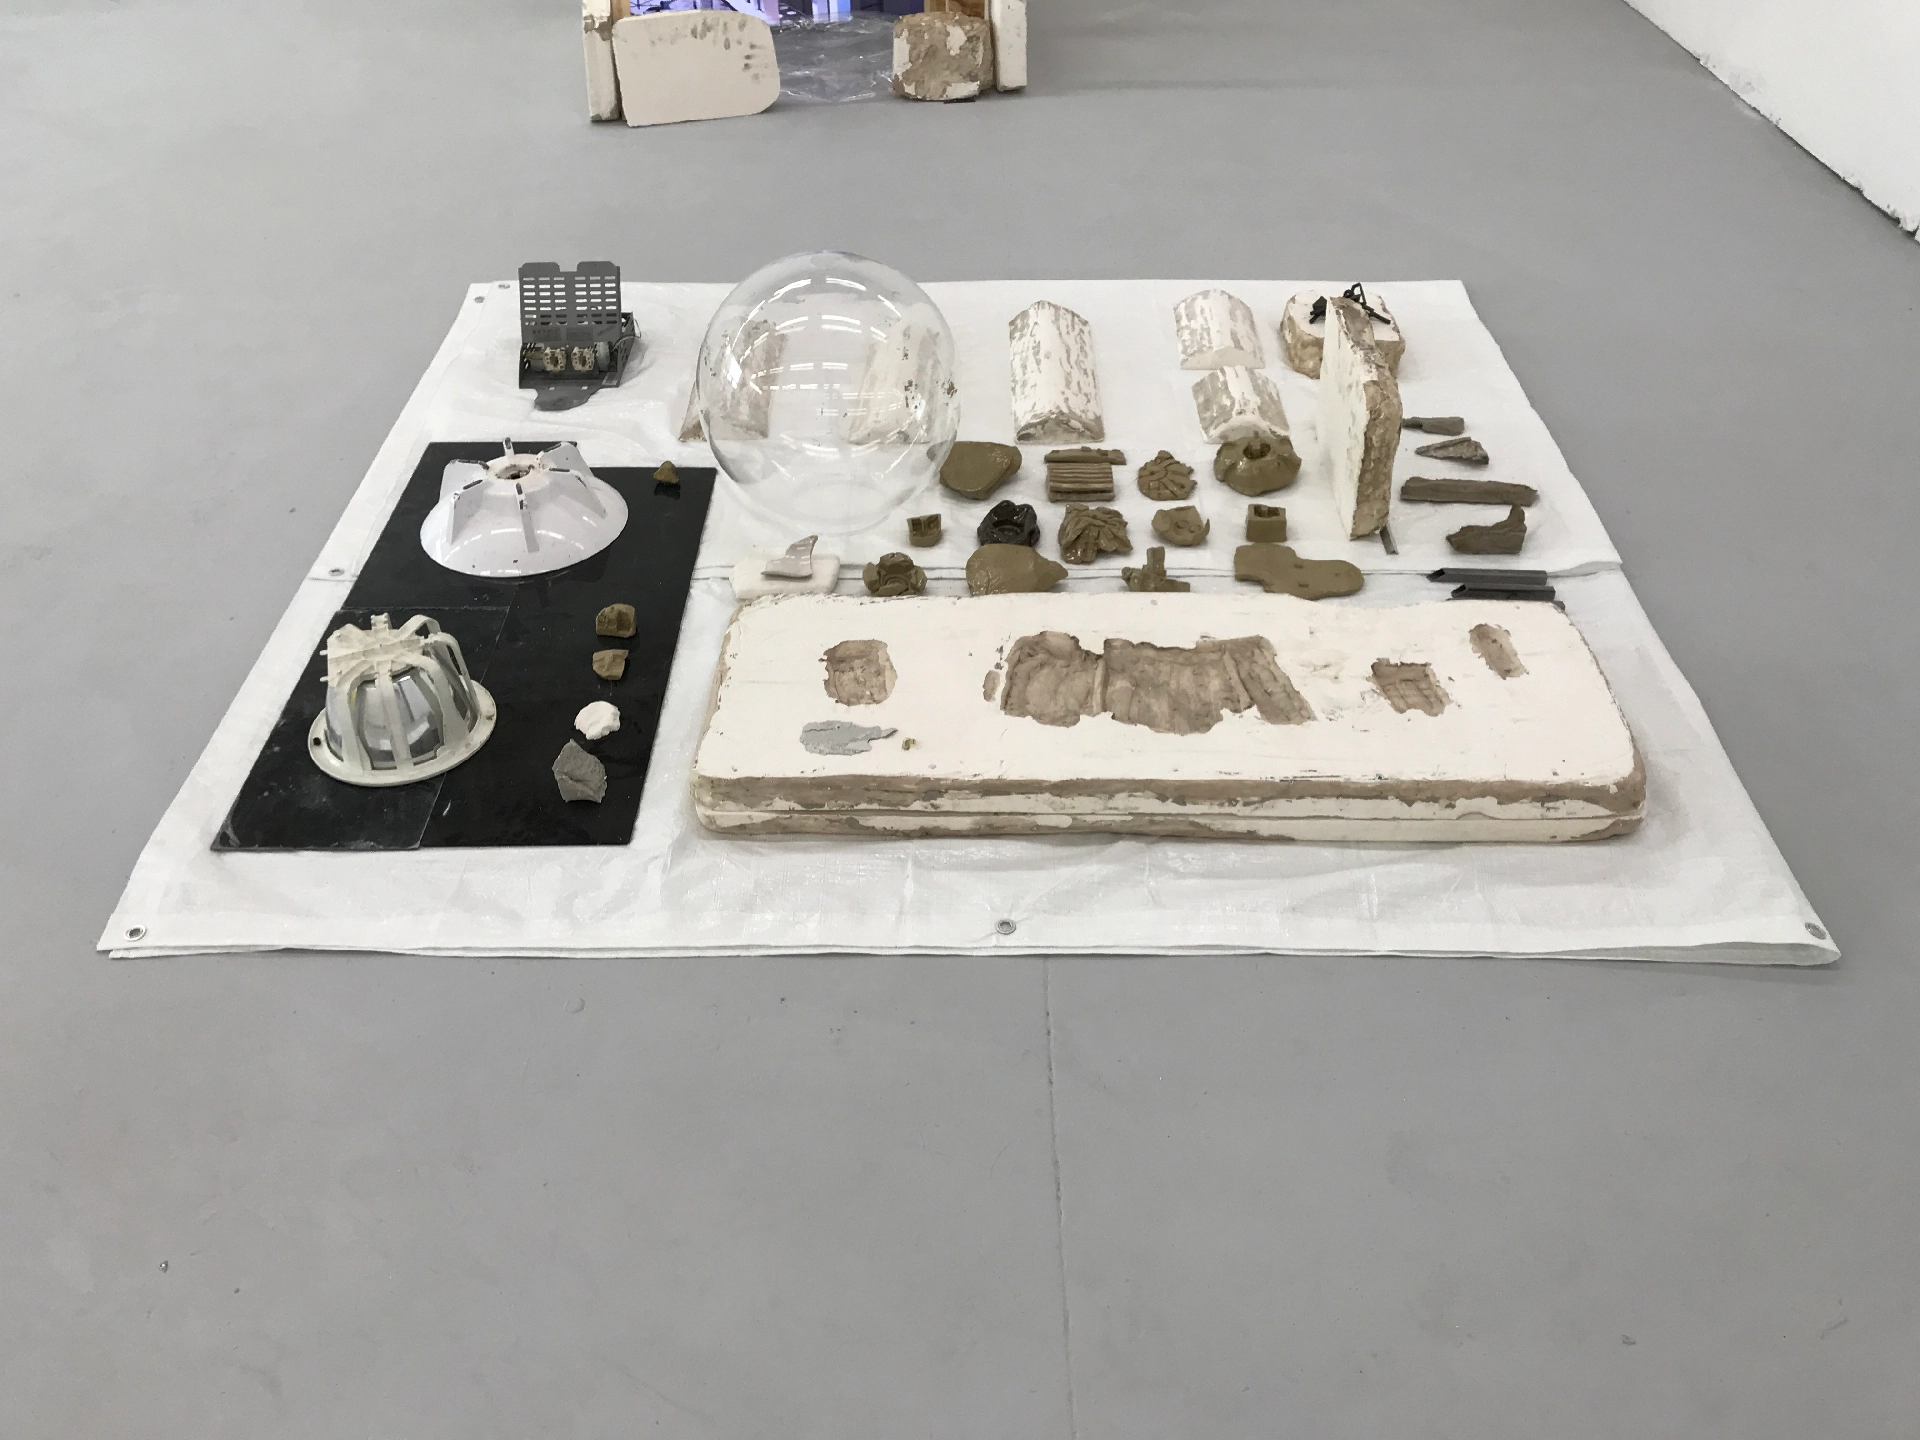 Tarpoulin, acrylic, found objects, plastic, glazed ceramic, plaster, unfired clay, 25mm steel square-tube, 3D printed SLS plastic